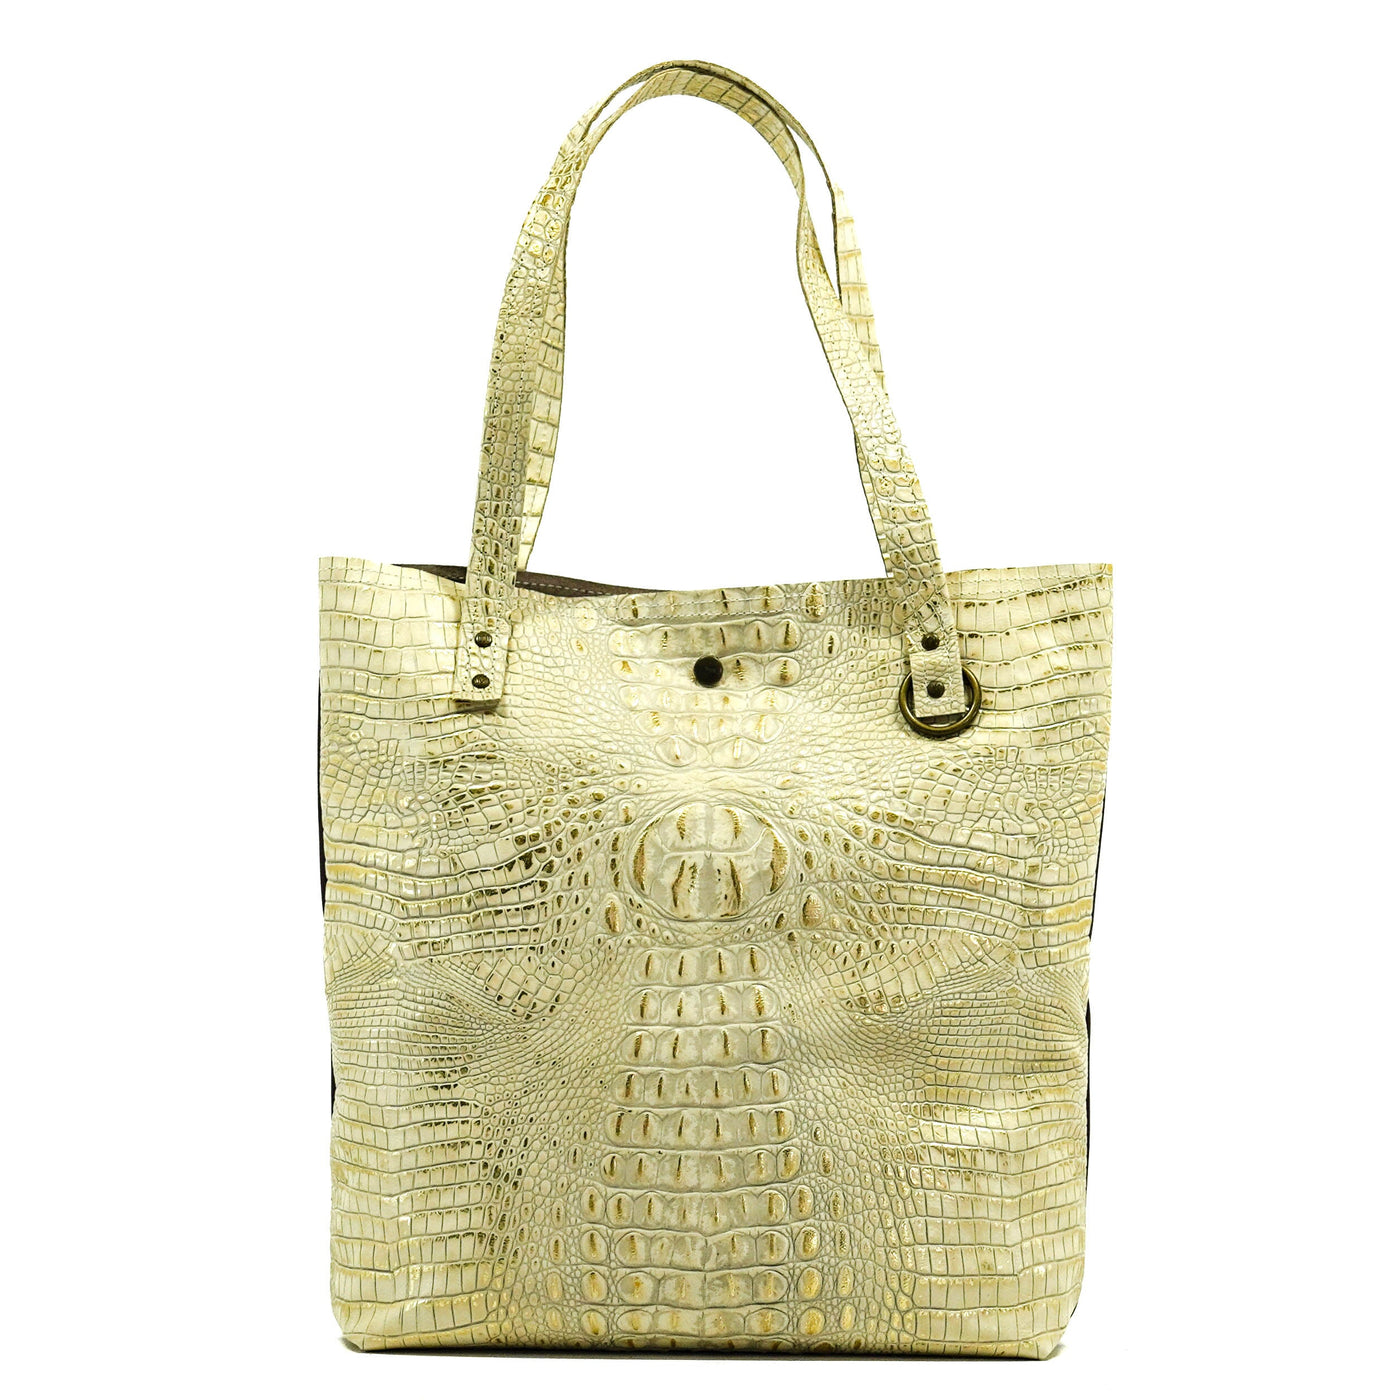 Trisha - All Embossed w/ Ivory Croc-Trisha-Western-Cowhide-Bags-Handmade-Products-Gifts-Dancing Cactus Designs